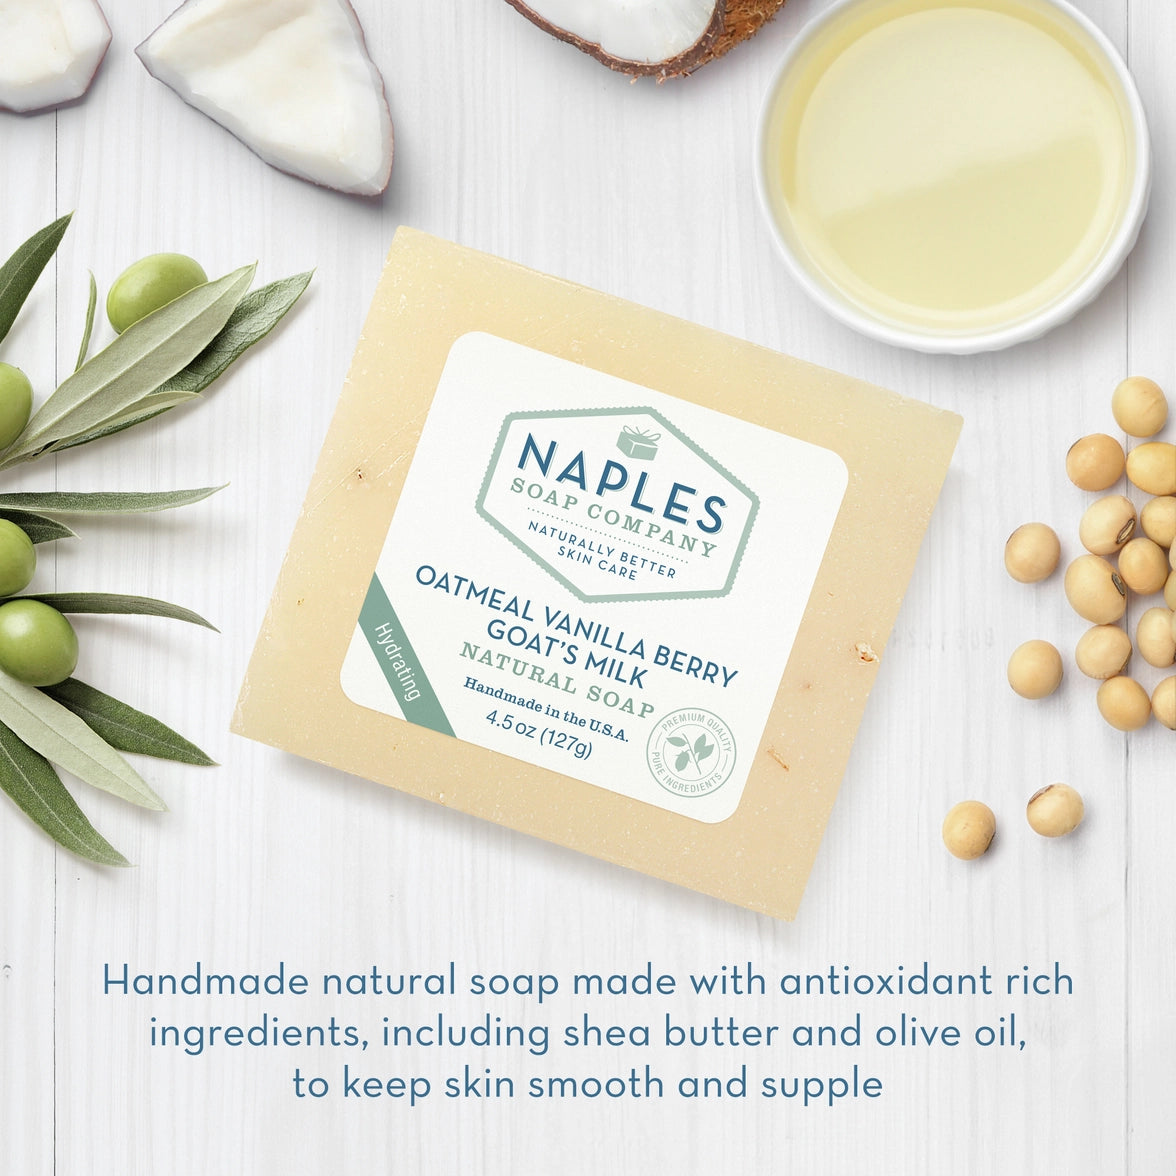 Naples Soap Co.: Oatmeal Vanilla Berry Goat's Milk Natural Soap